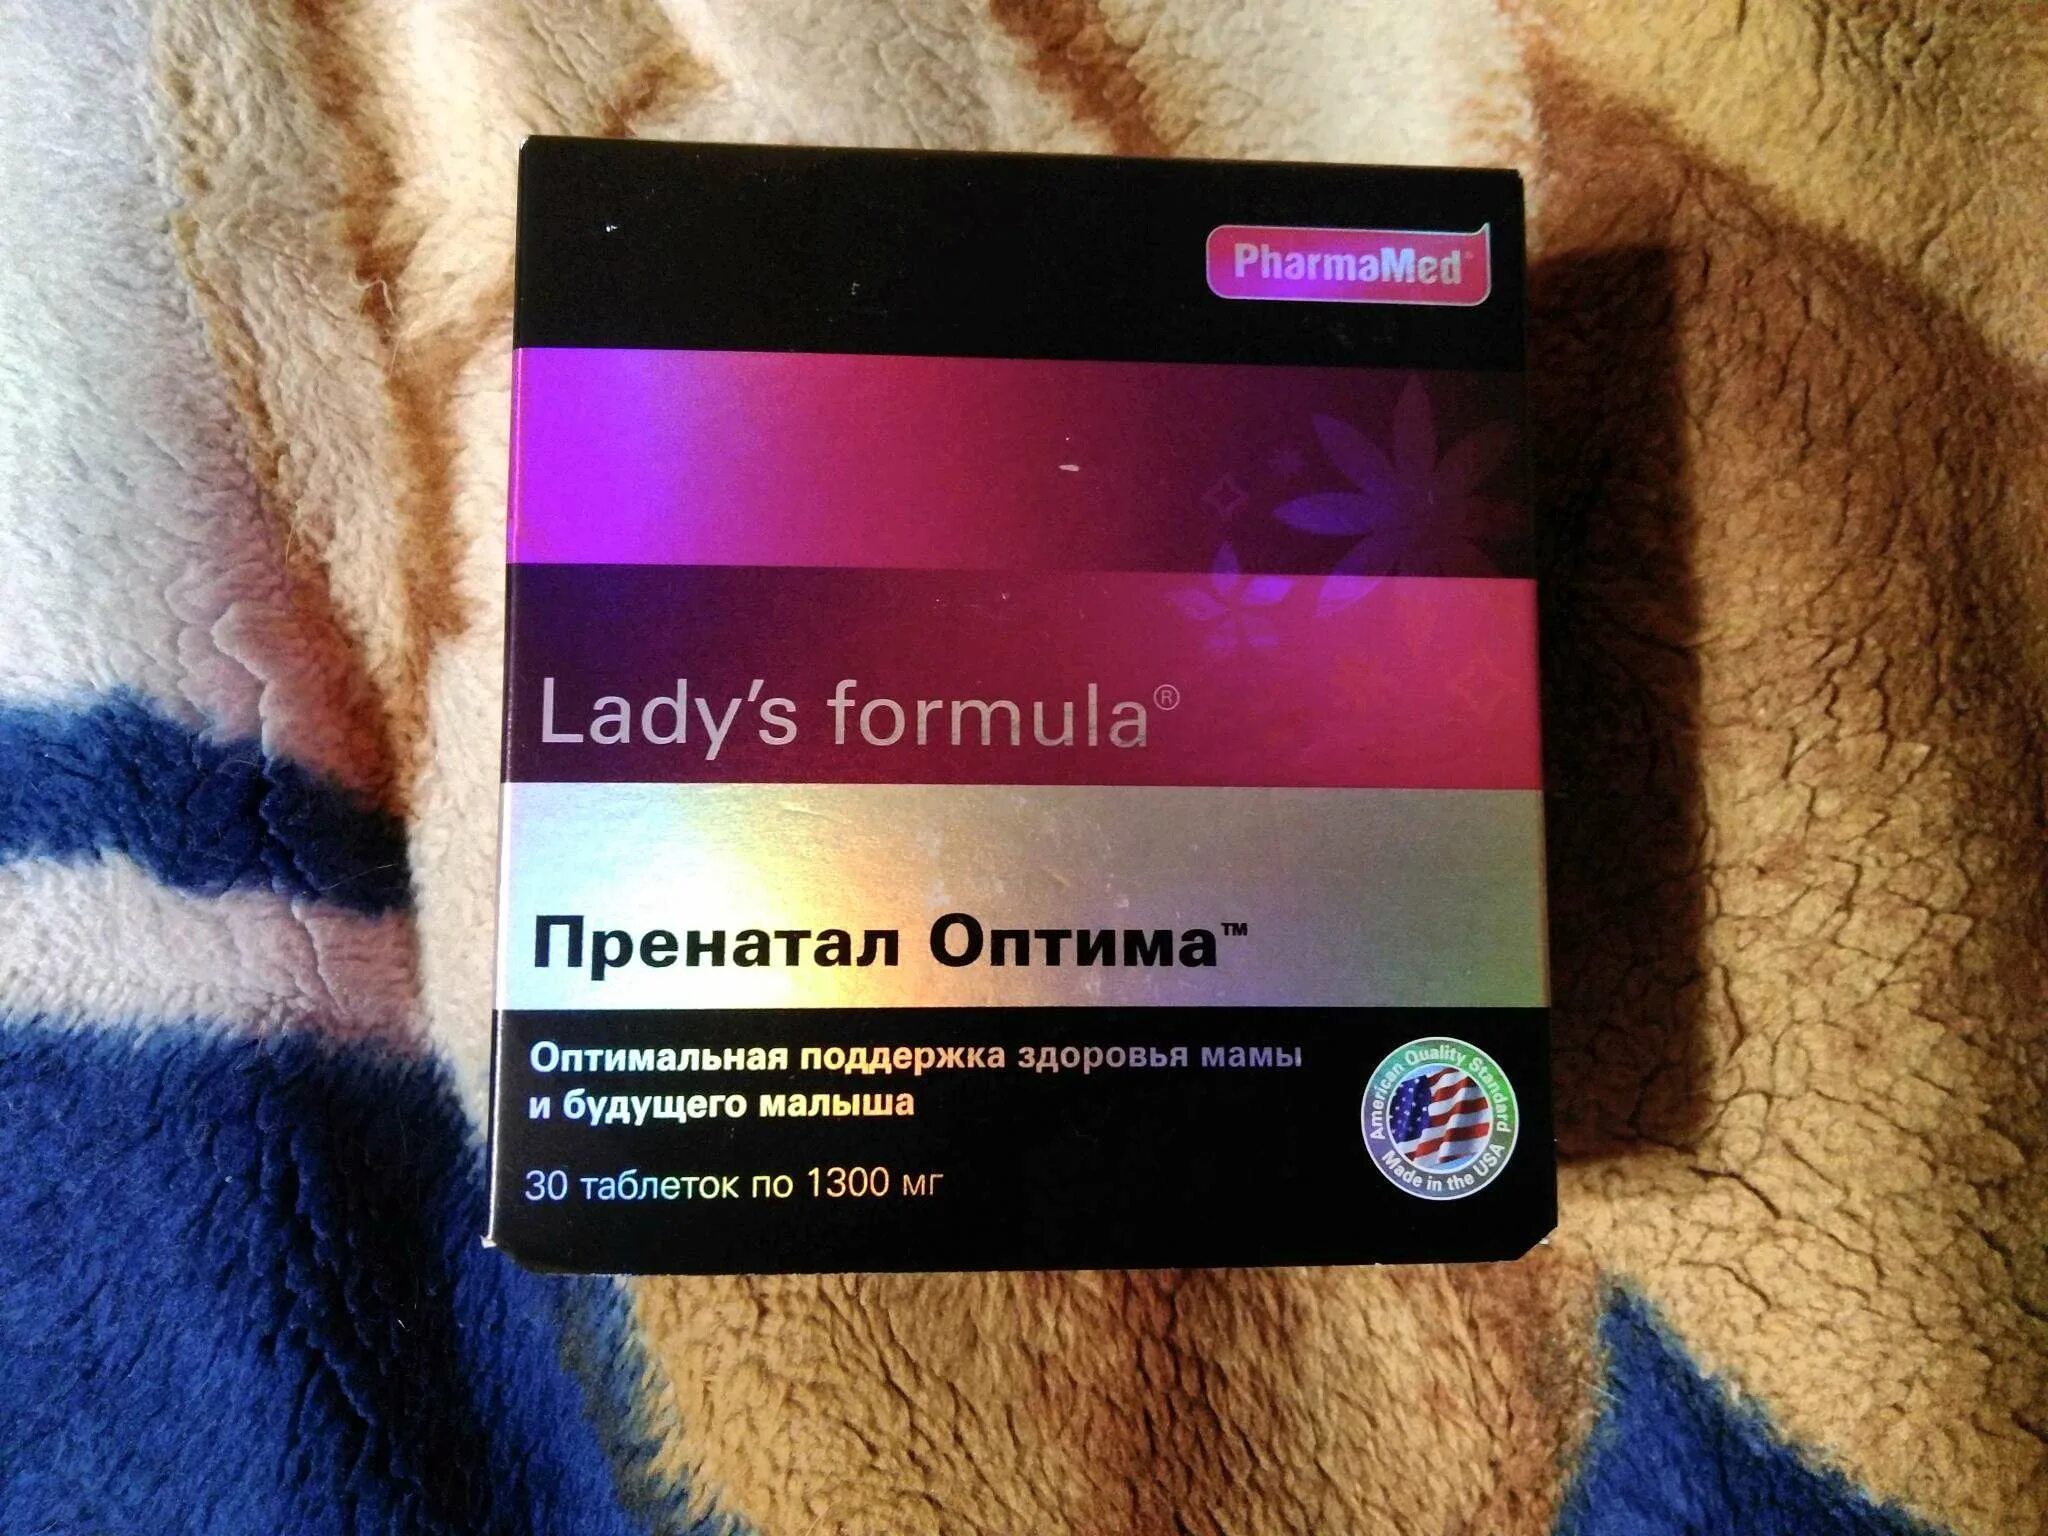 Lady s formula 30. Пренатал Оптима. Ледис формула пренатал. Пренатал Оптима ледис. Витамины пренатал Оптима.